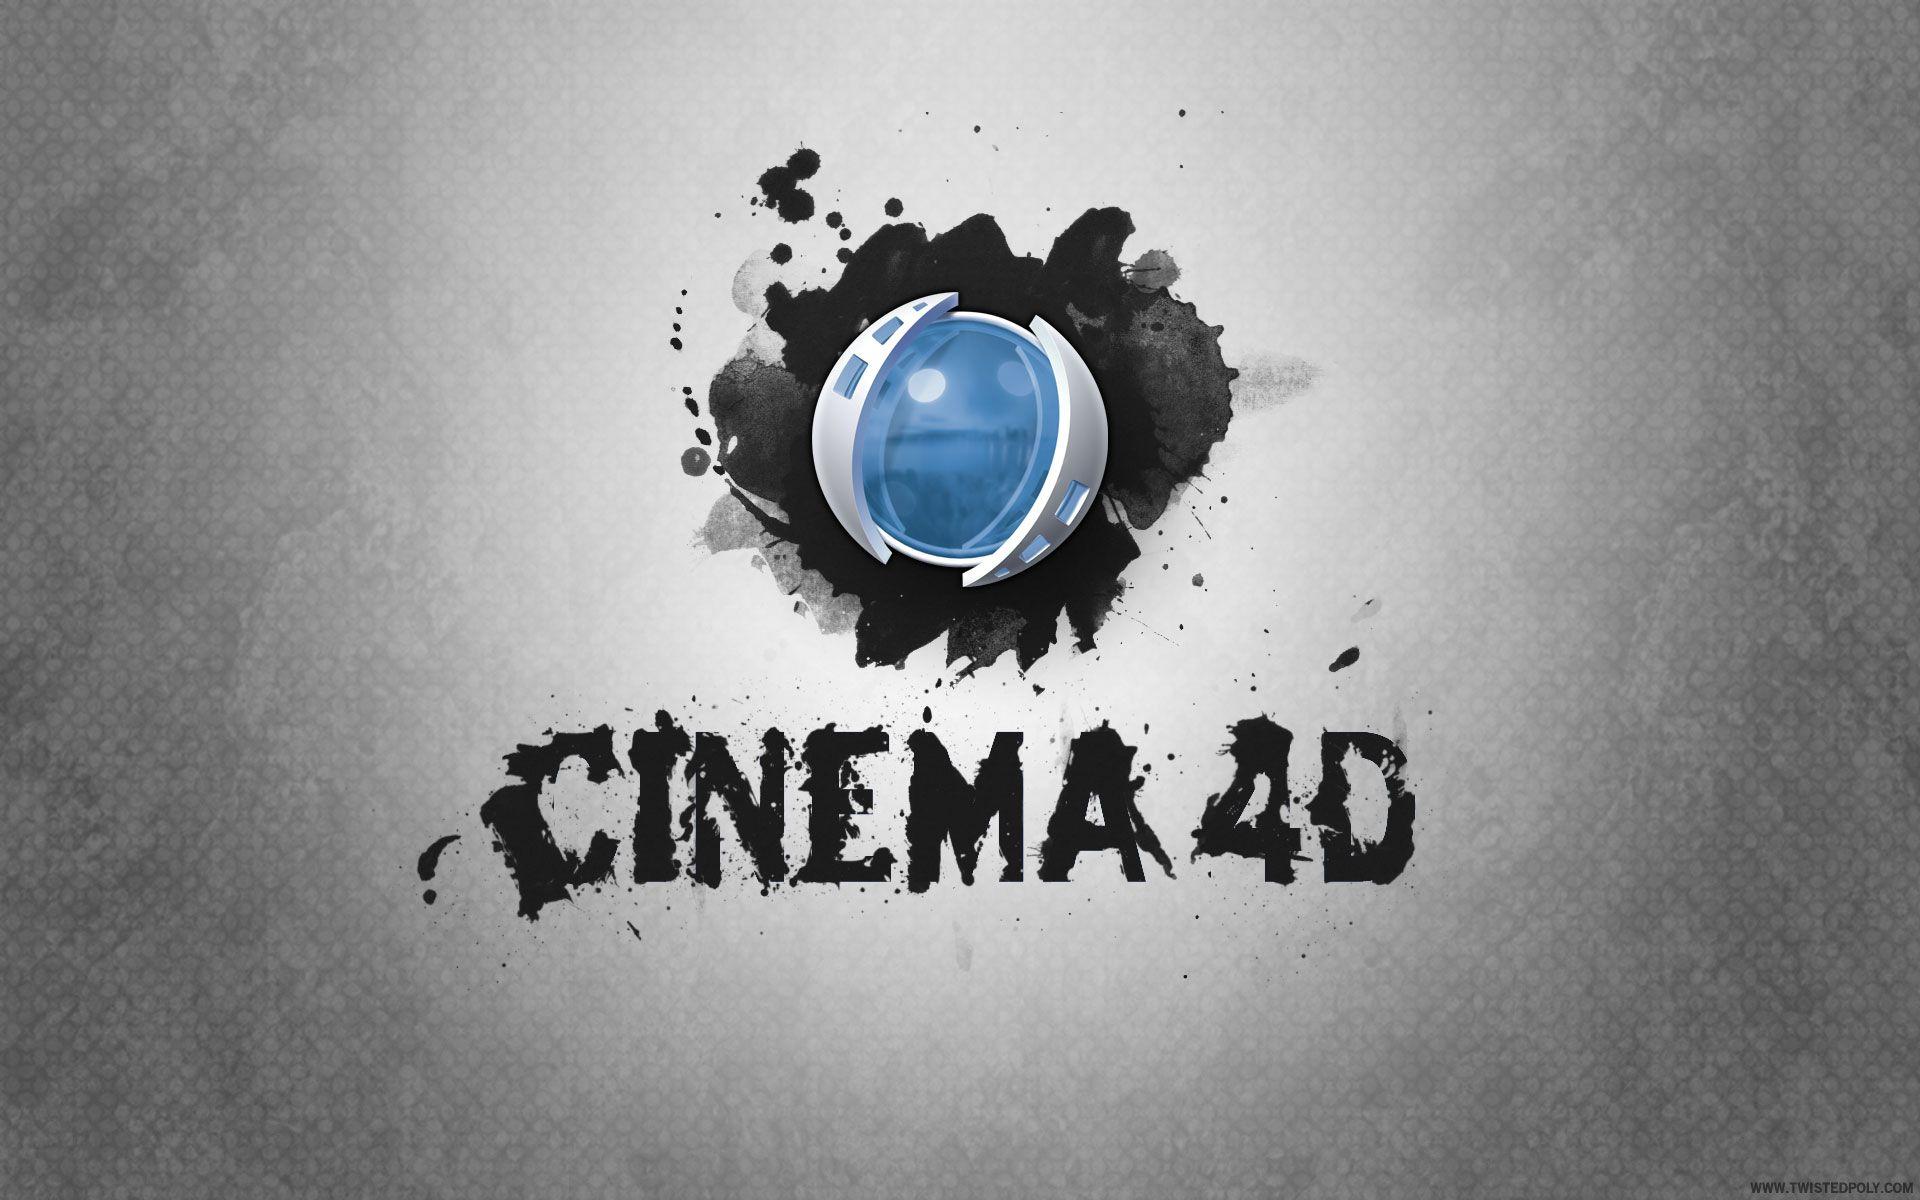 Cinema 4D. Adobe Master™